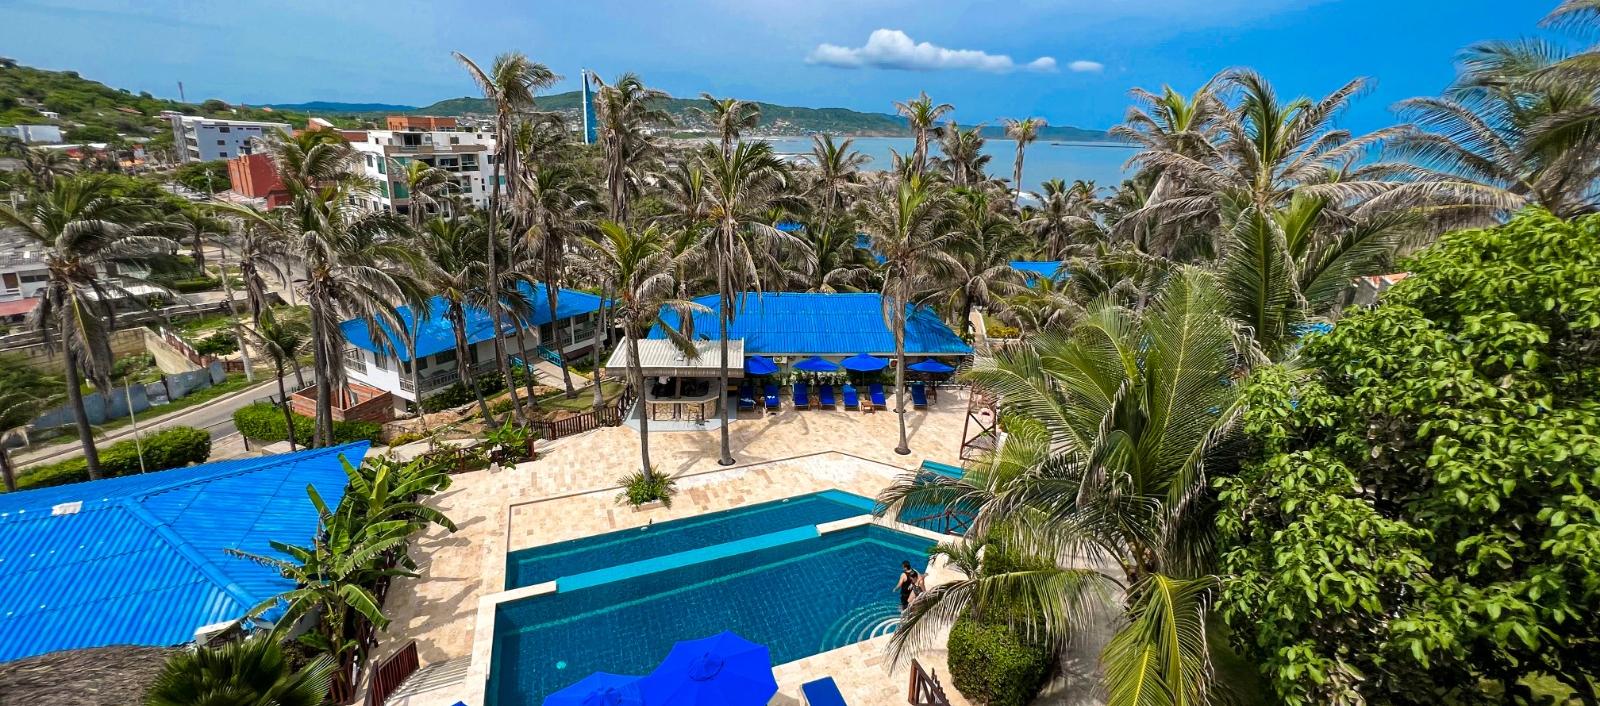 Hotel Pradomar, considerado un paraíso natural que mira al Mar Caribe